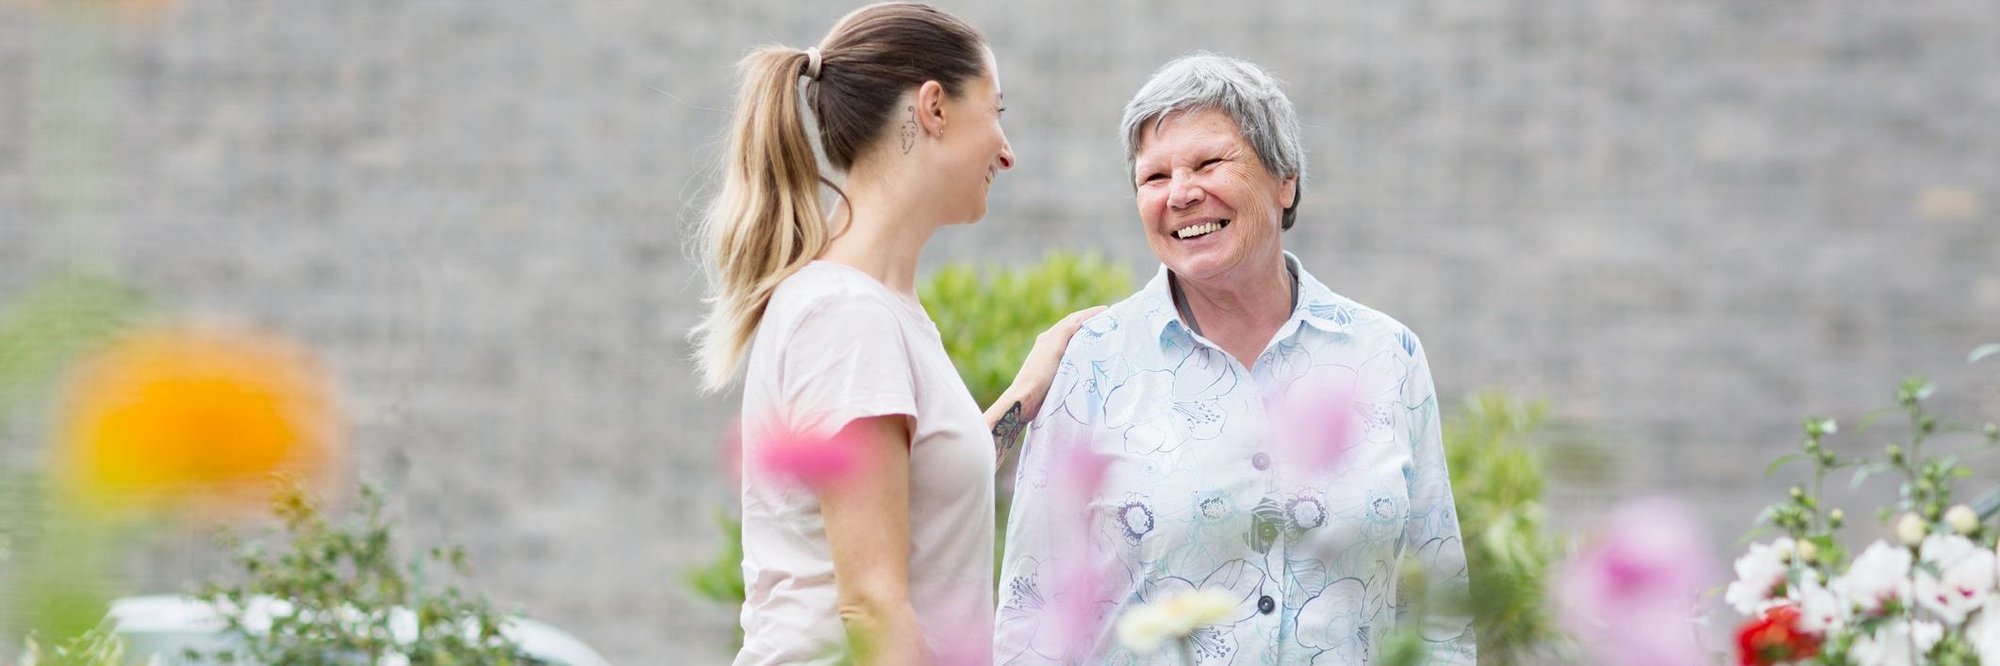 Older MS patient talking with caregiver